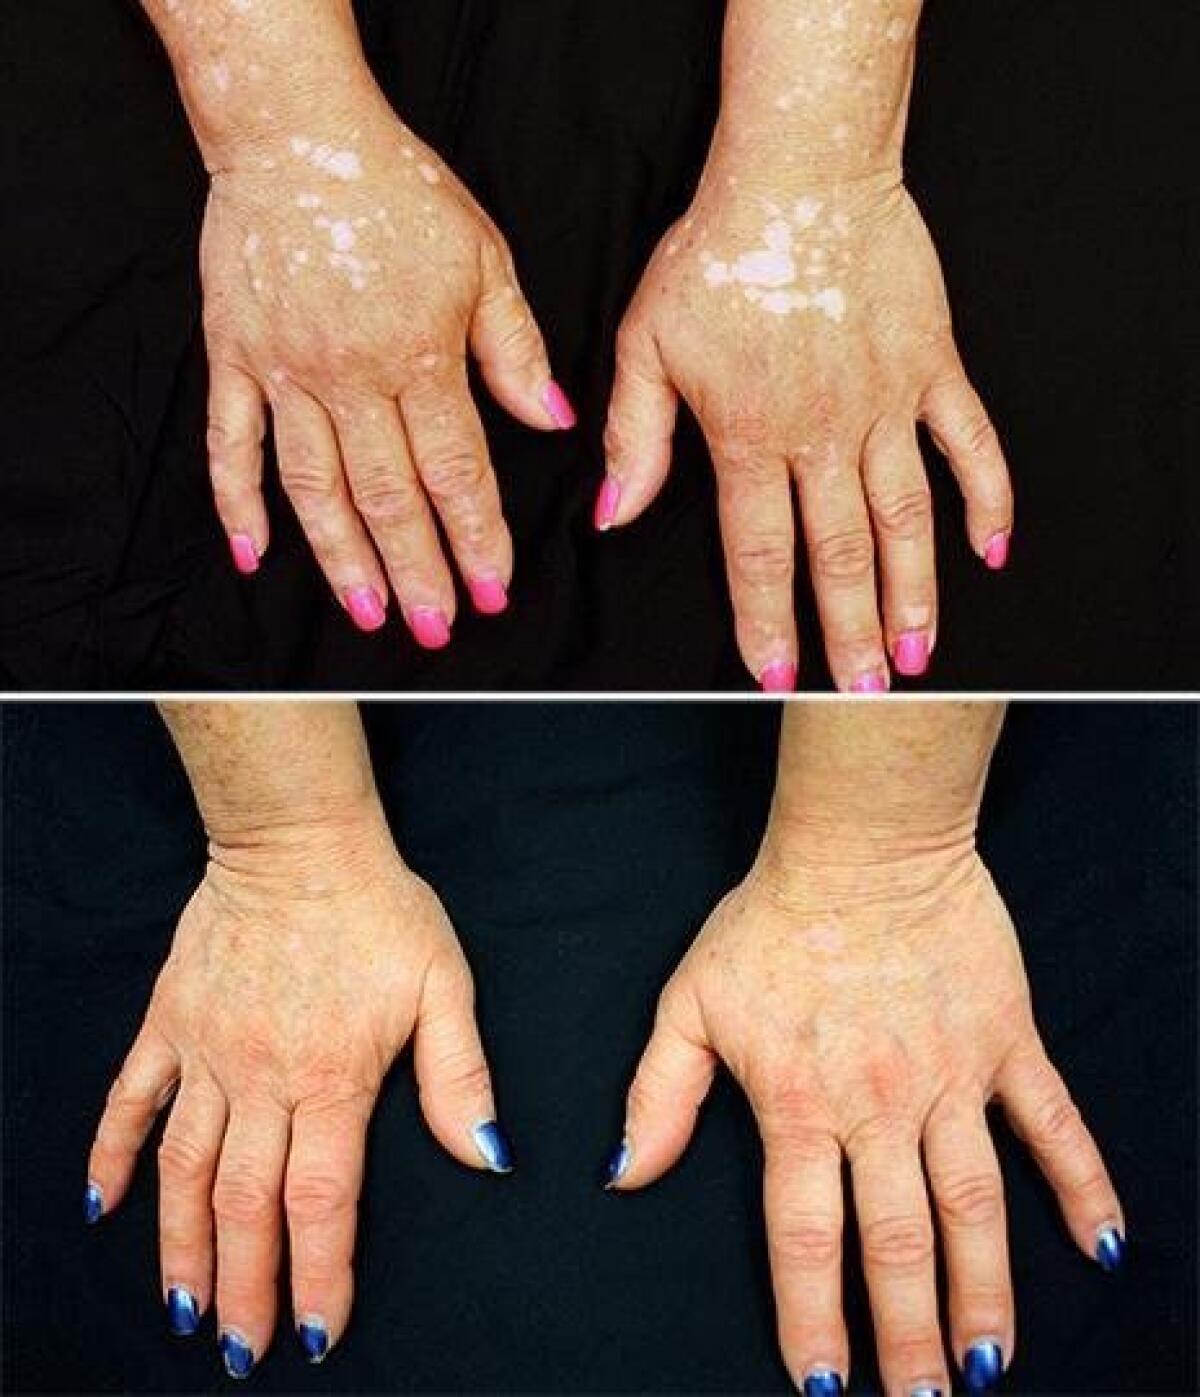 michael jackson vitiligo before and after